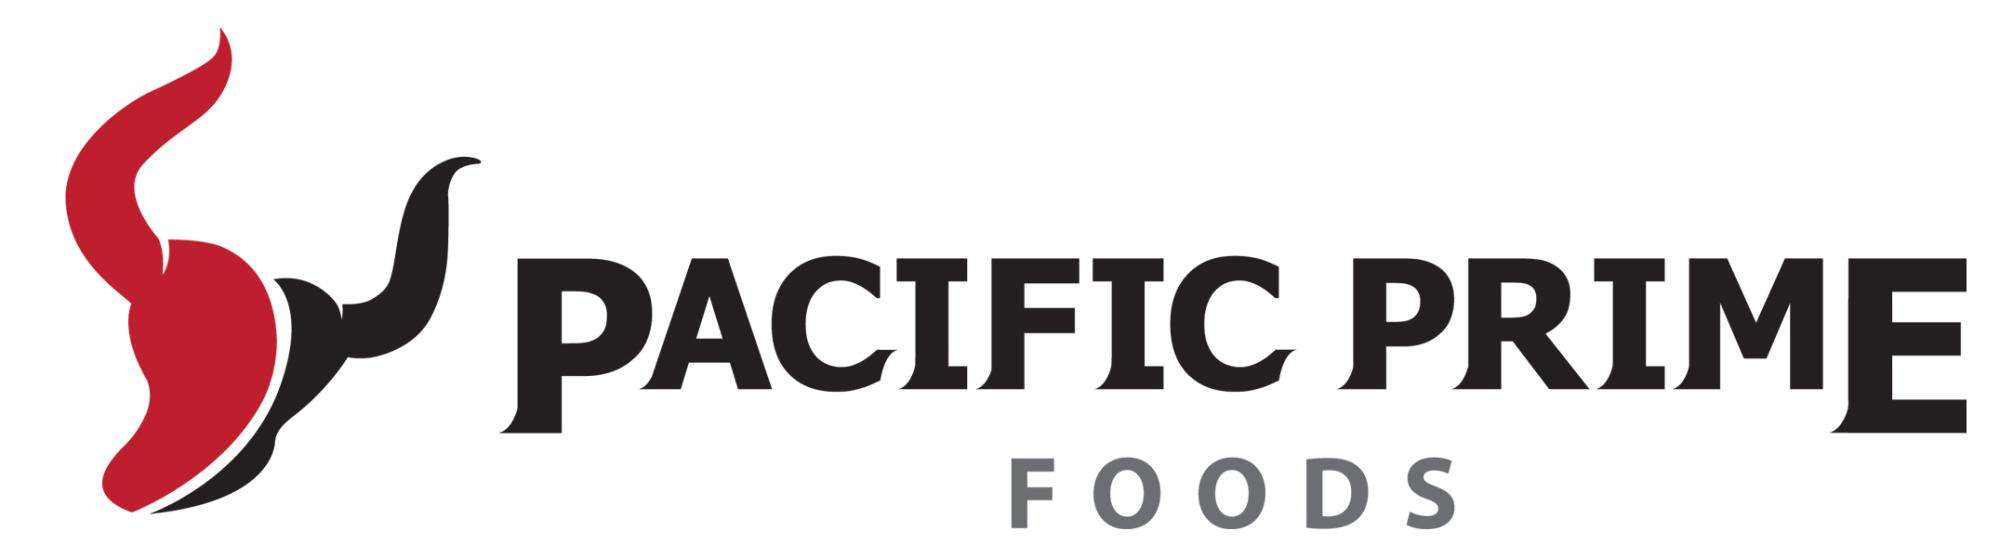 Pacific Prime Foods, Inc. Logo